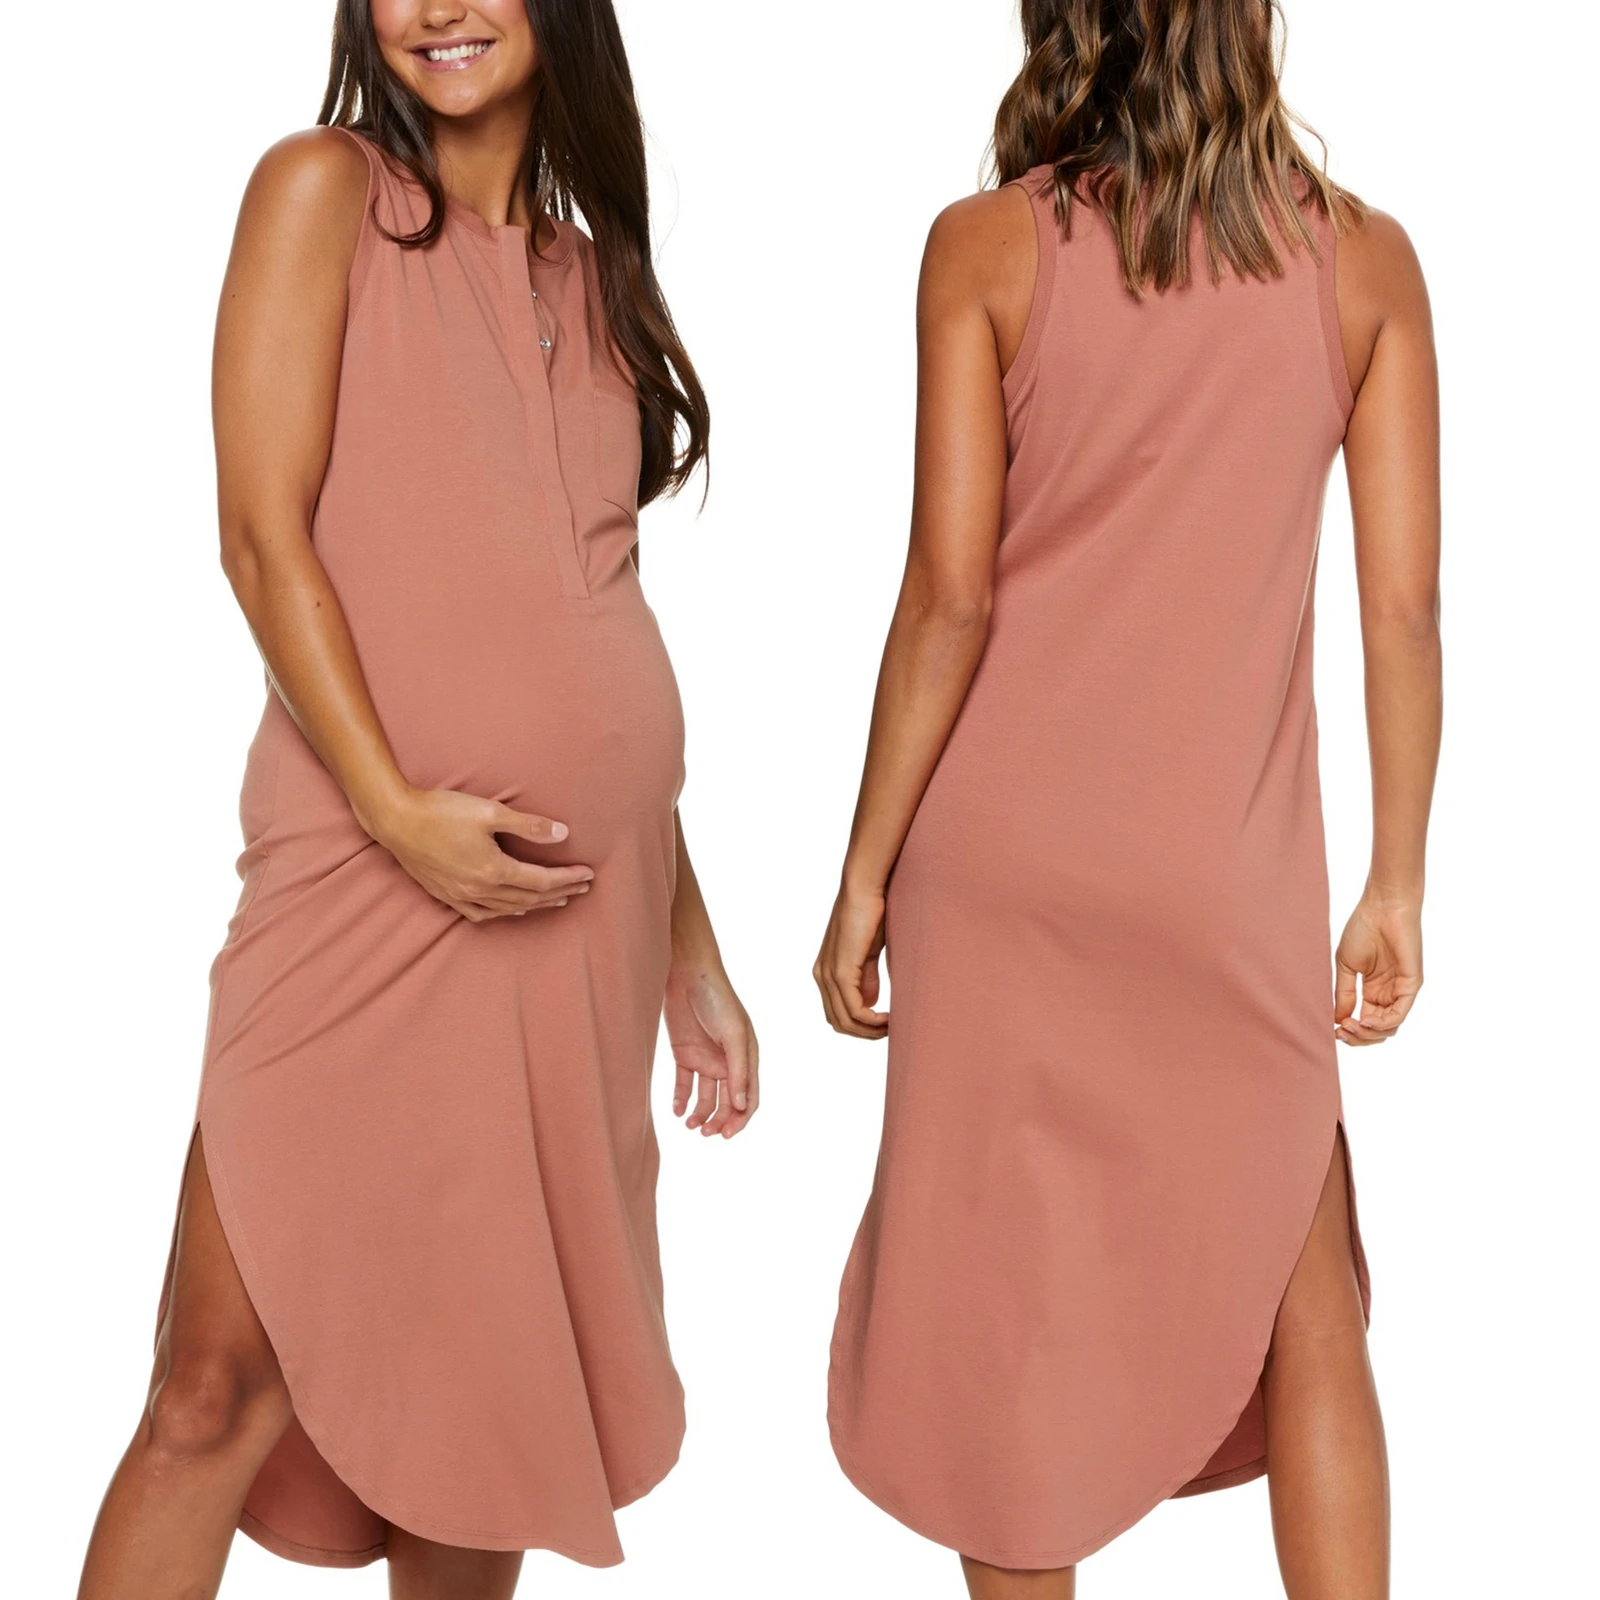 Buy Maternity Dresses Women Clothing ...